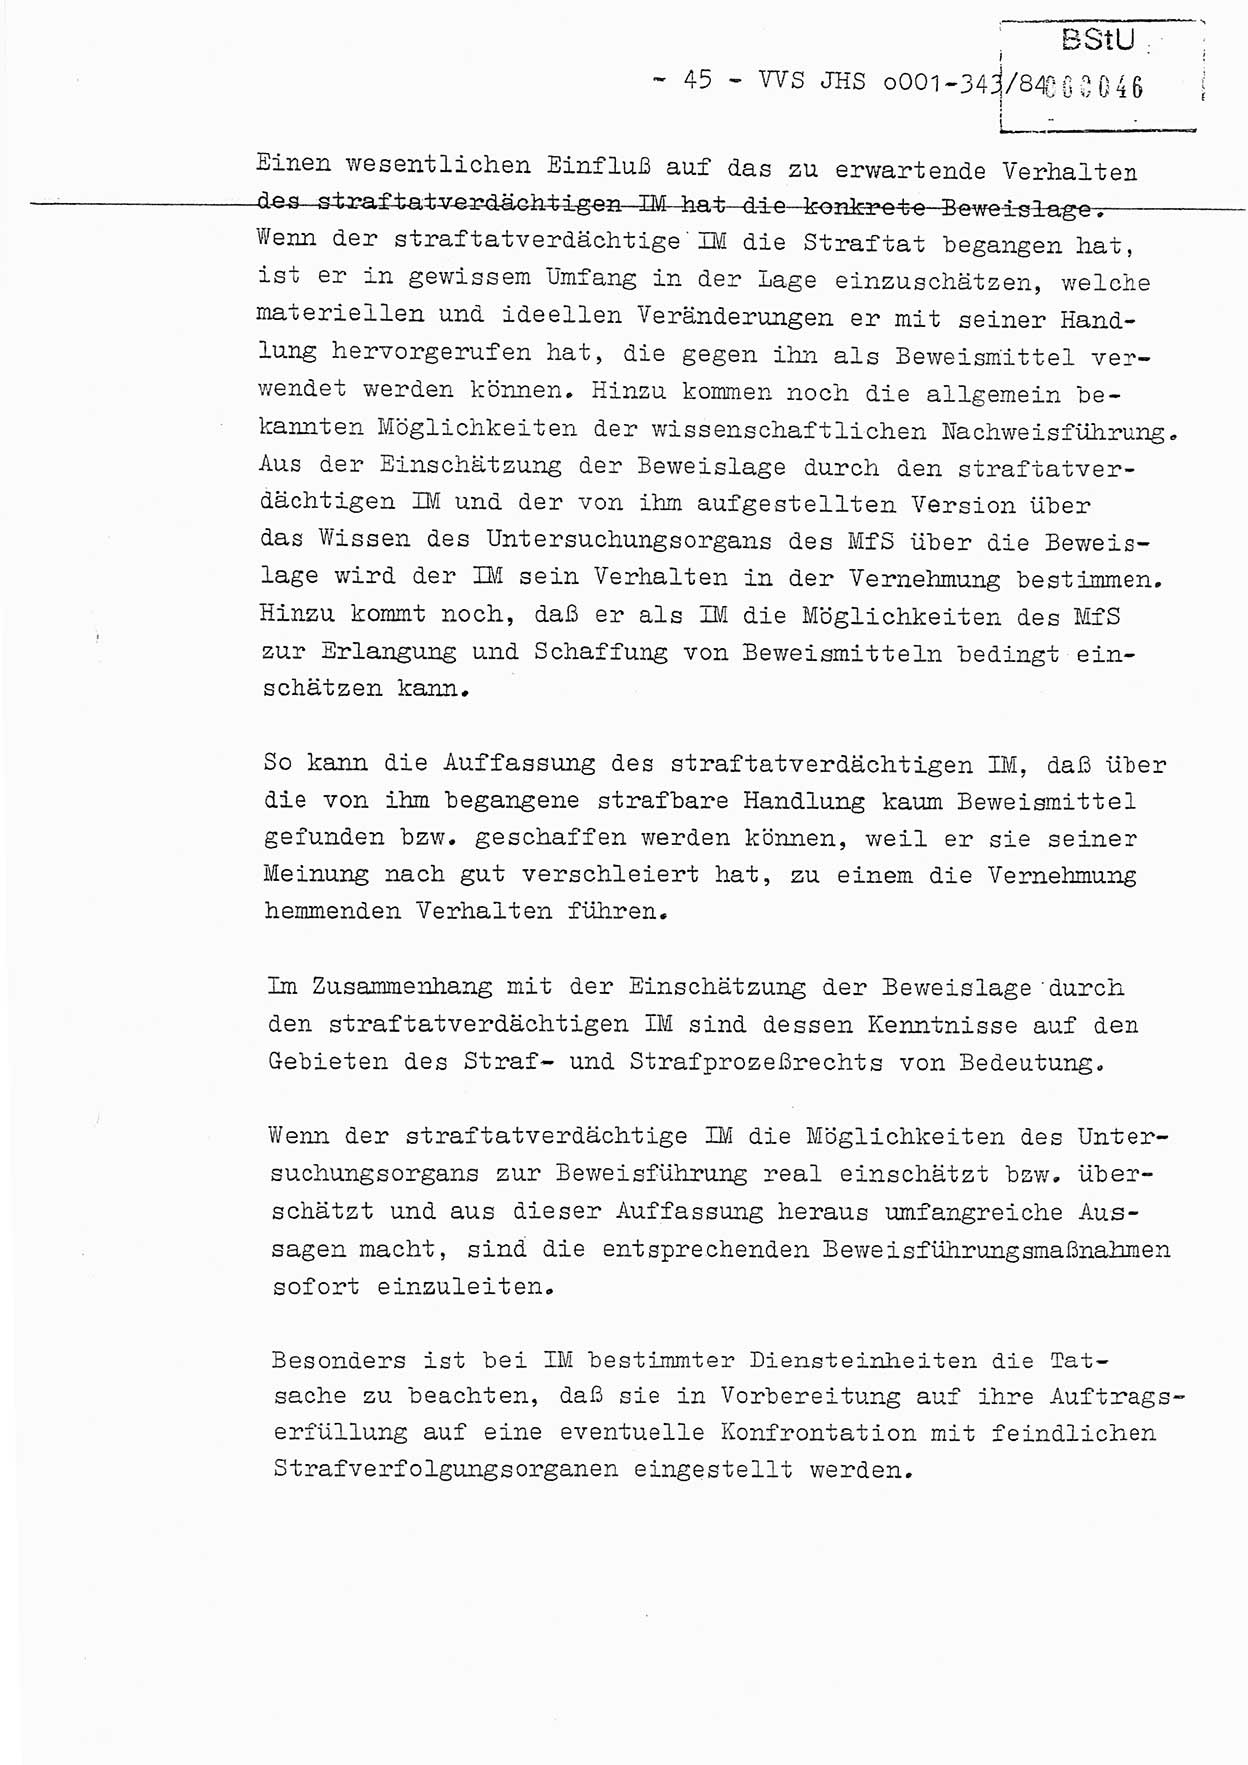 Diplomarbeit, Oberleutnant Bernd Michael (HA Ⅸ/5), Oberleutnant Peter Felber (HA IX/5), Ministerium für Staatssicherheit (MfS) [Deutsche Demokratische Republik (DDR)], Juristische Hochschule (JHS), Vertrauliche Verschlußsache (VVS) o001-343/84, Potsdam 1985, Seite 45 (Dipl.-Arb. MfS DDR JHS VVS o001-343/84 1985, S. 45)